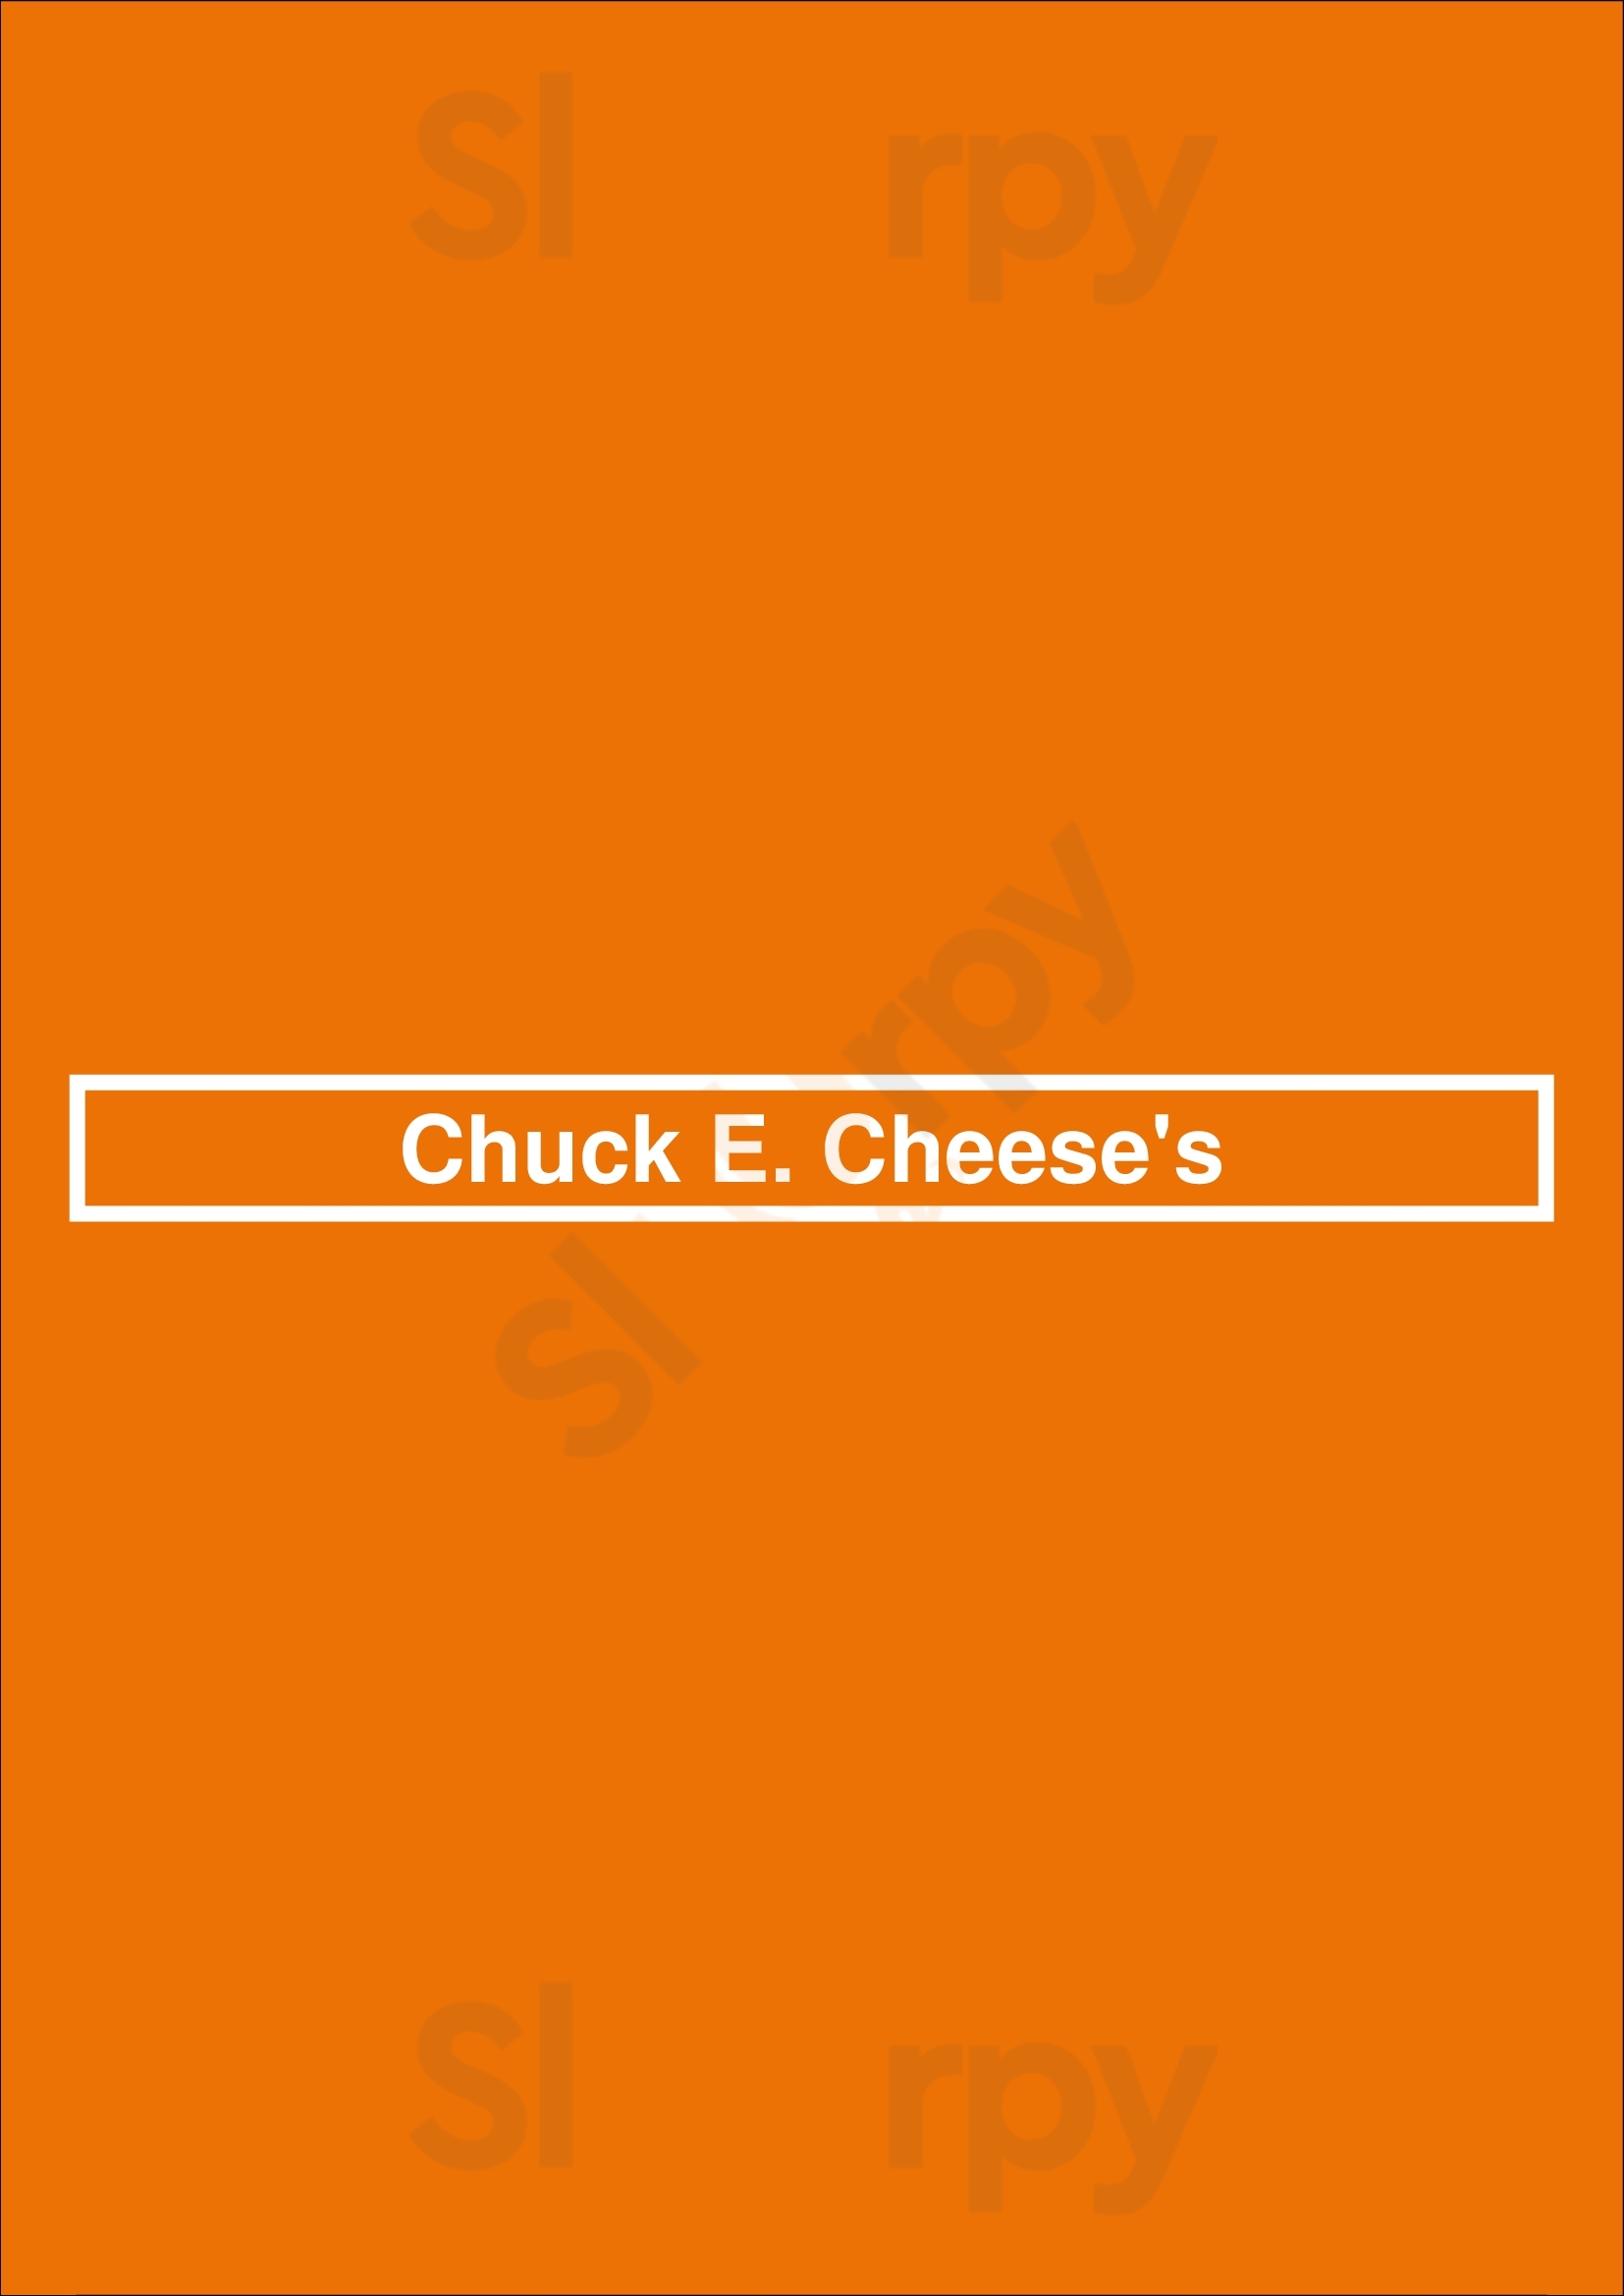 Chuck E. Cheese York Menu - 1